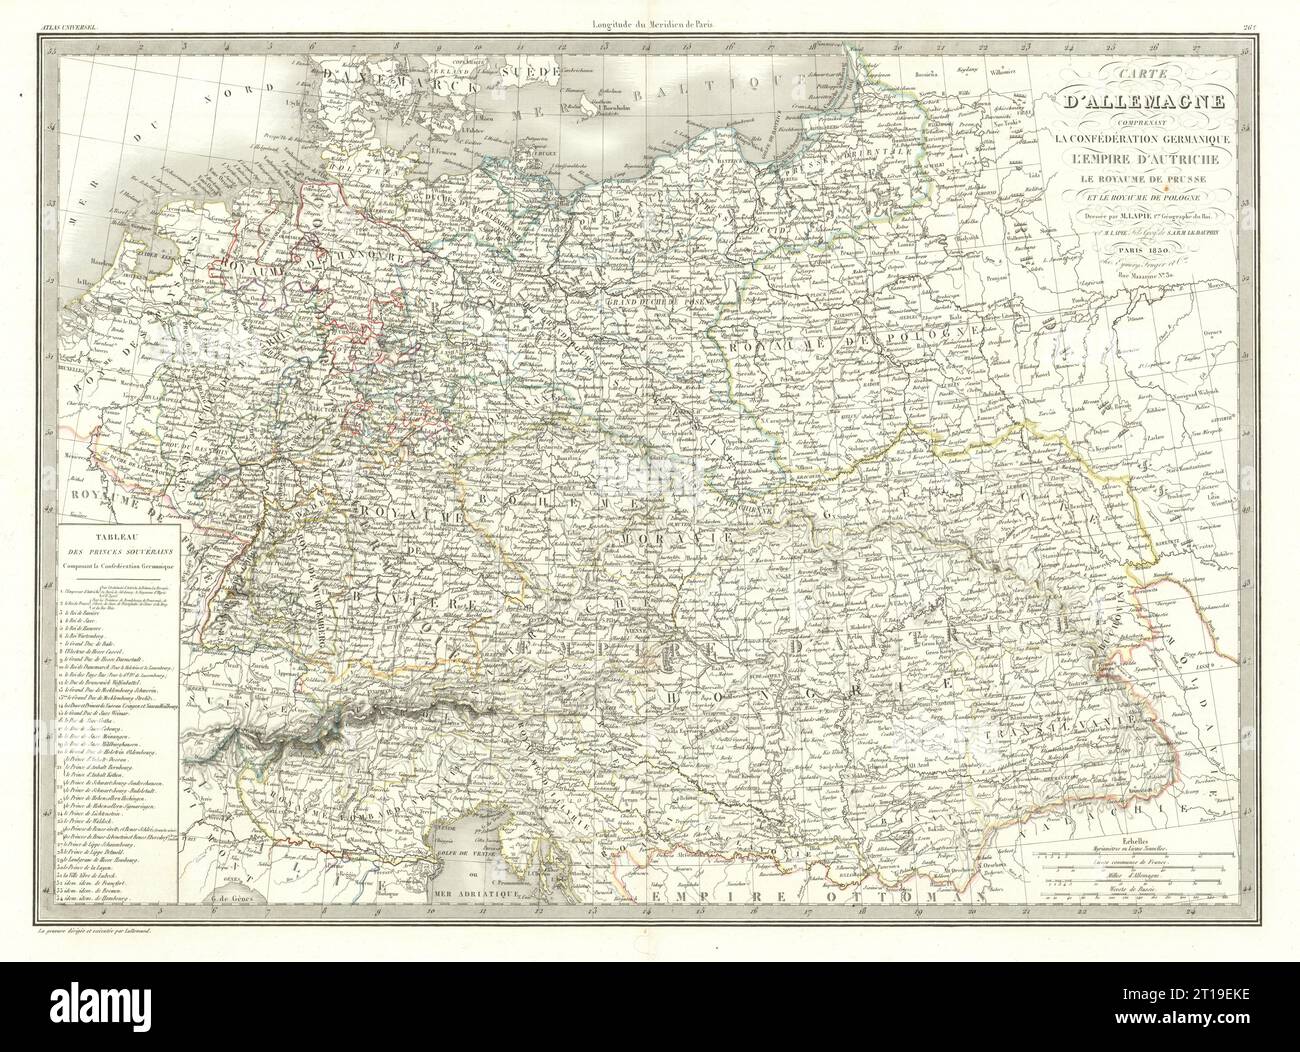 Mapa de l'Allemagne… Alemania Imperio austriaco Prusia Polonia. LAPIE 1830 mapa Foto de stock